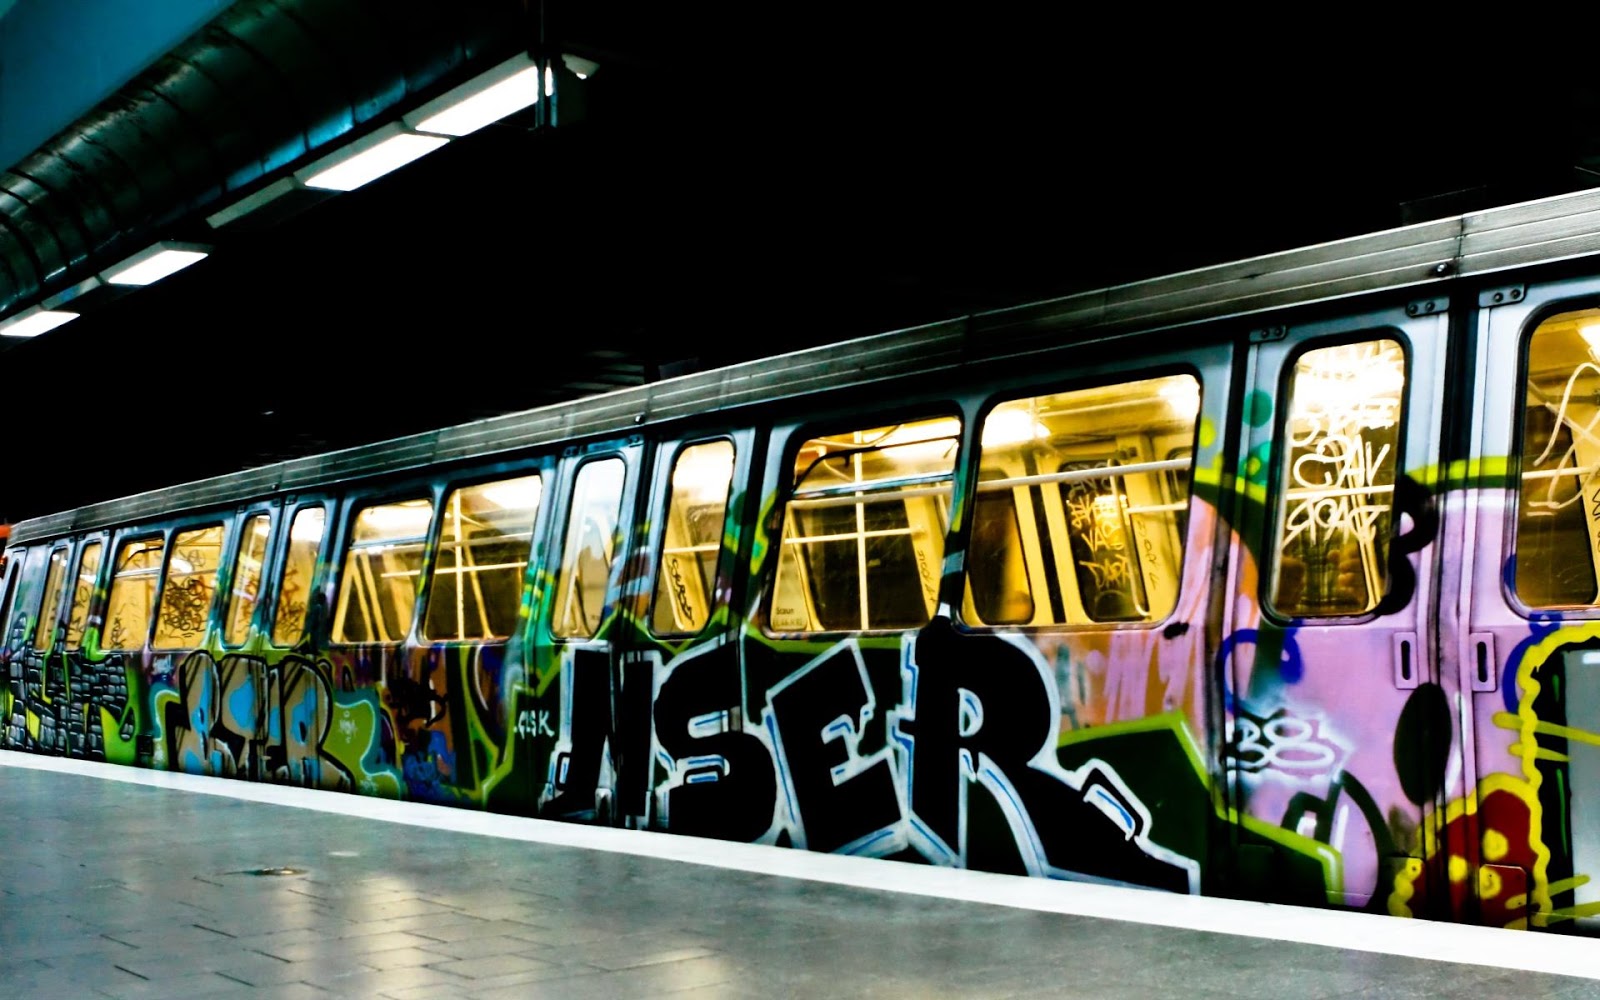 graffiti hintergrundebilder, graffiti bilder, graffiti wallpaper hd, coole graffiti hintergrundebilder kostenlos